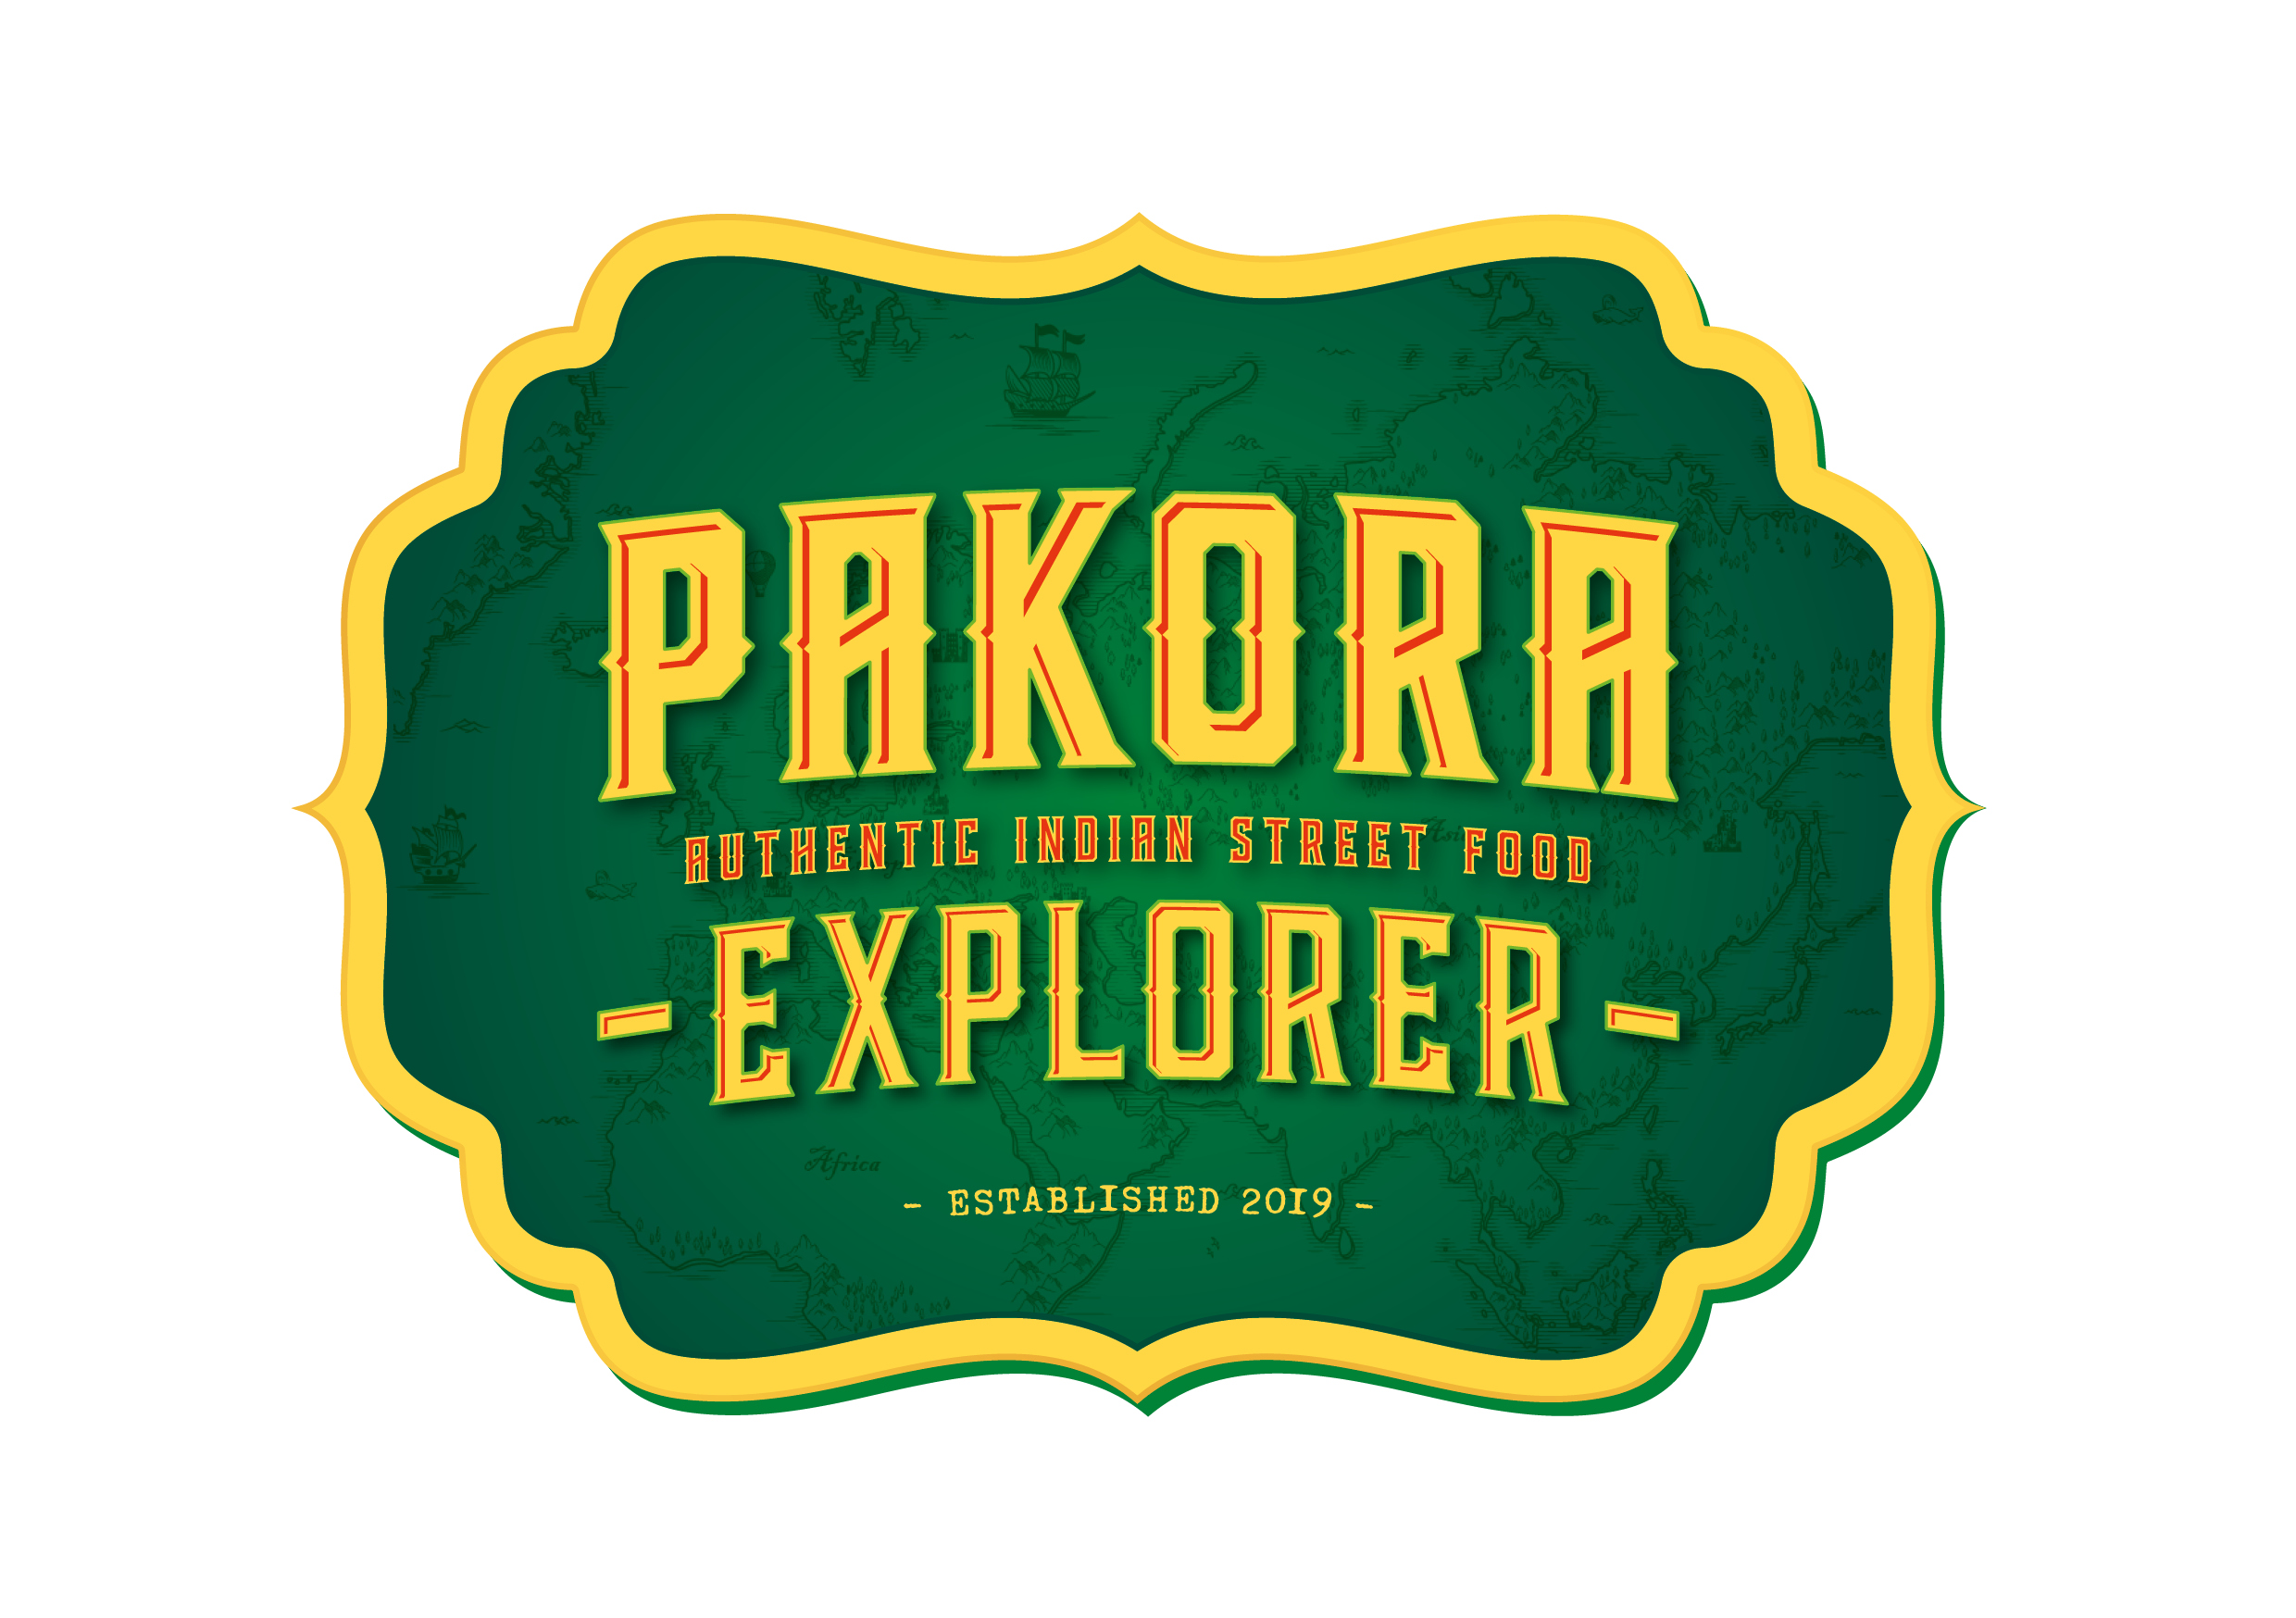 The Pakora Explorer Food Truck